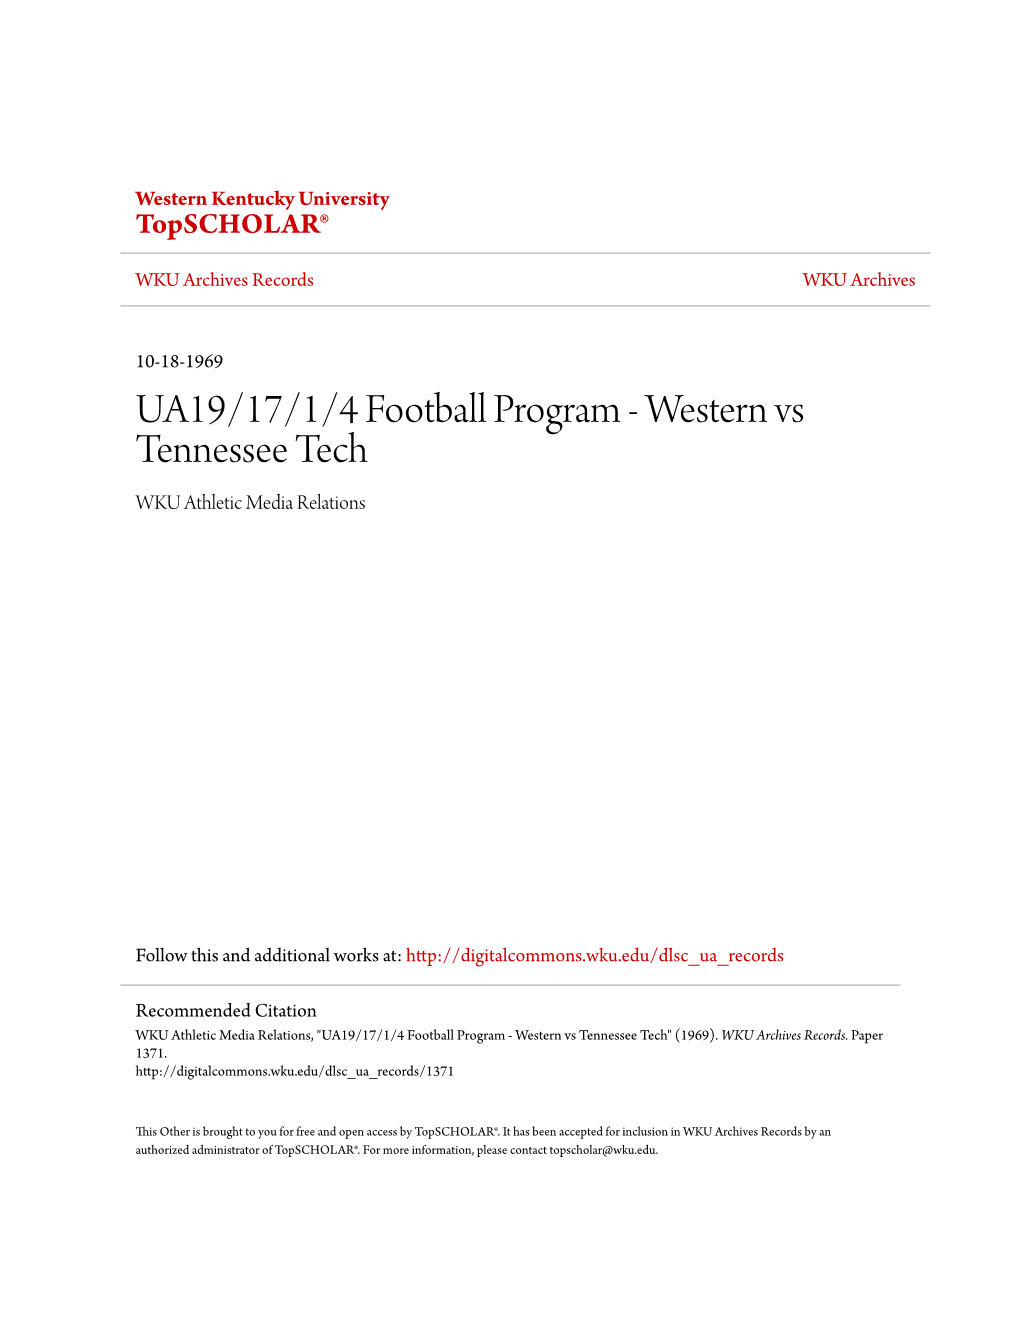 UA19/17/1/4 Football Program - Western Vs Tennessee Tech WKU Athletic Media Relations